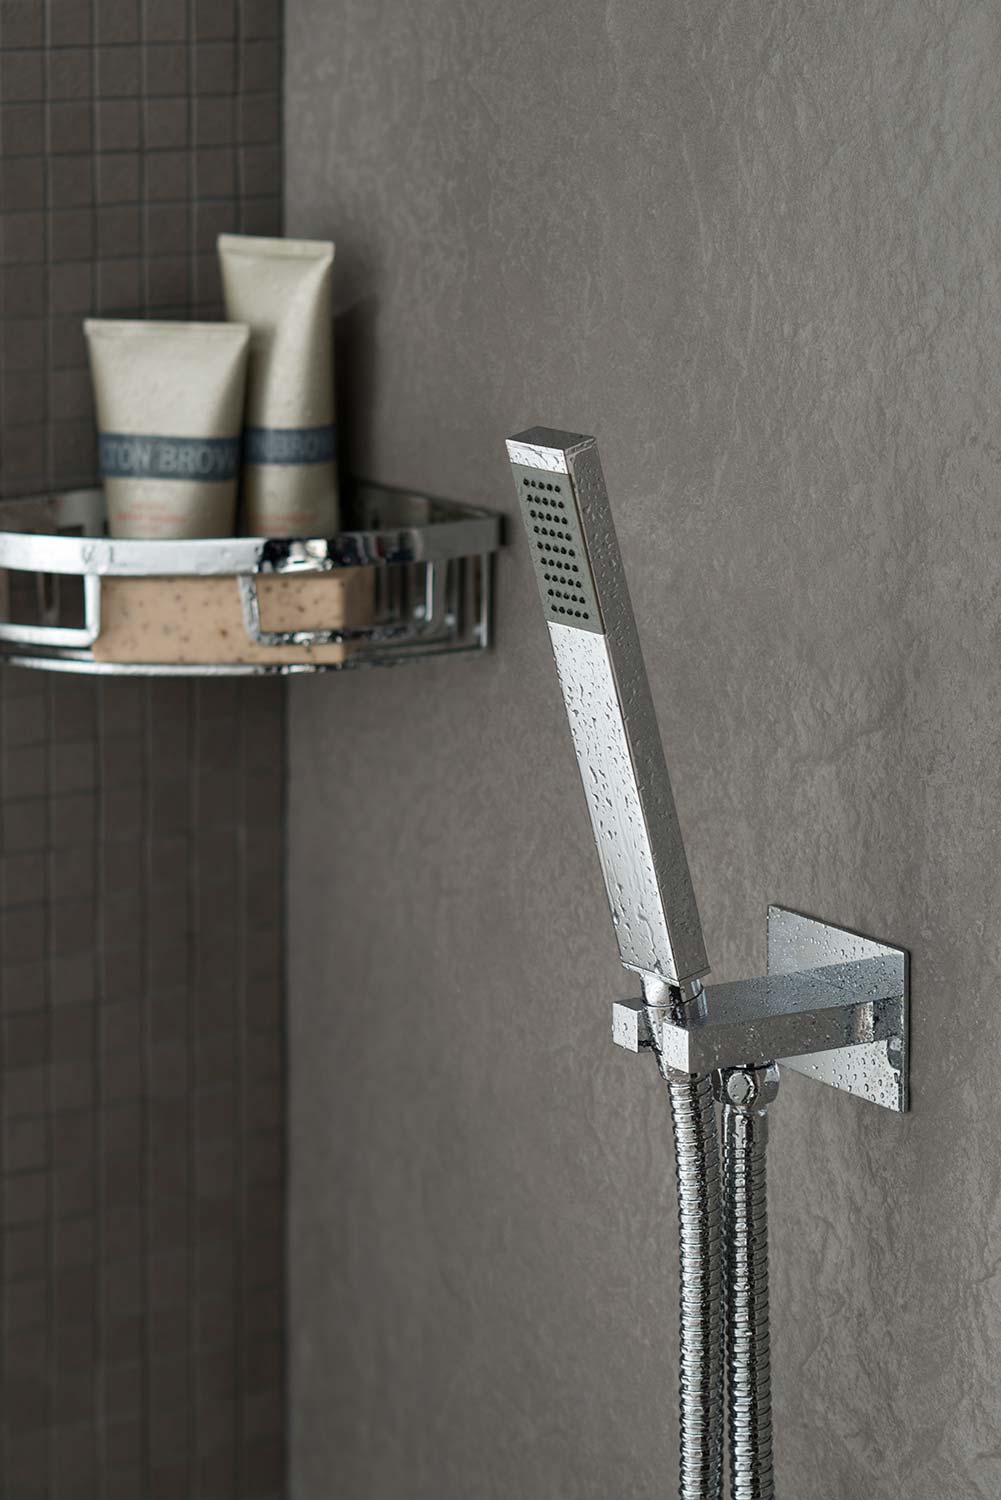 Slimline modern shower handset and wall outlet bracket on a slate wall